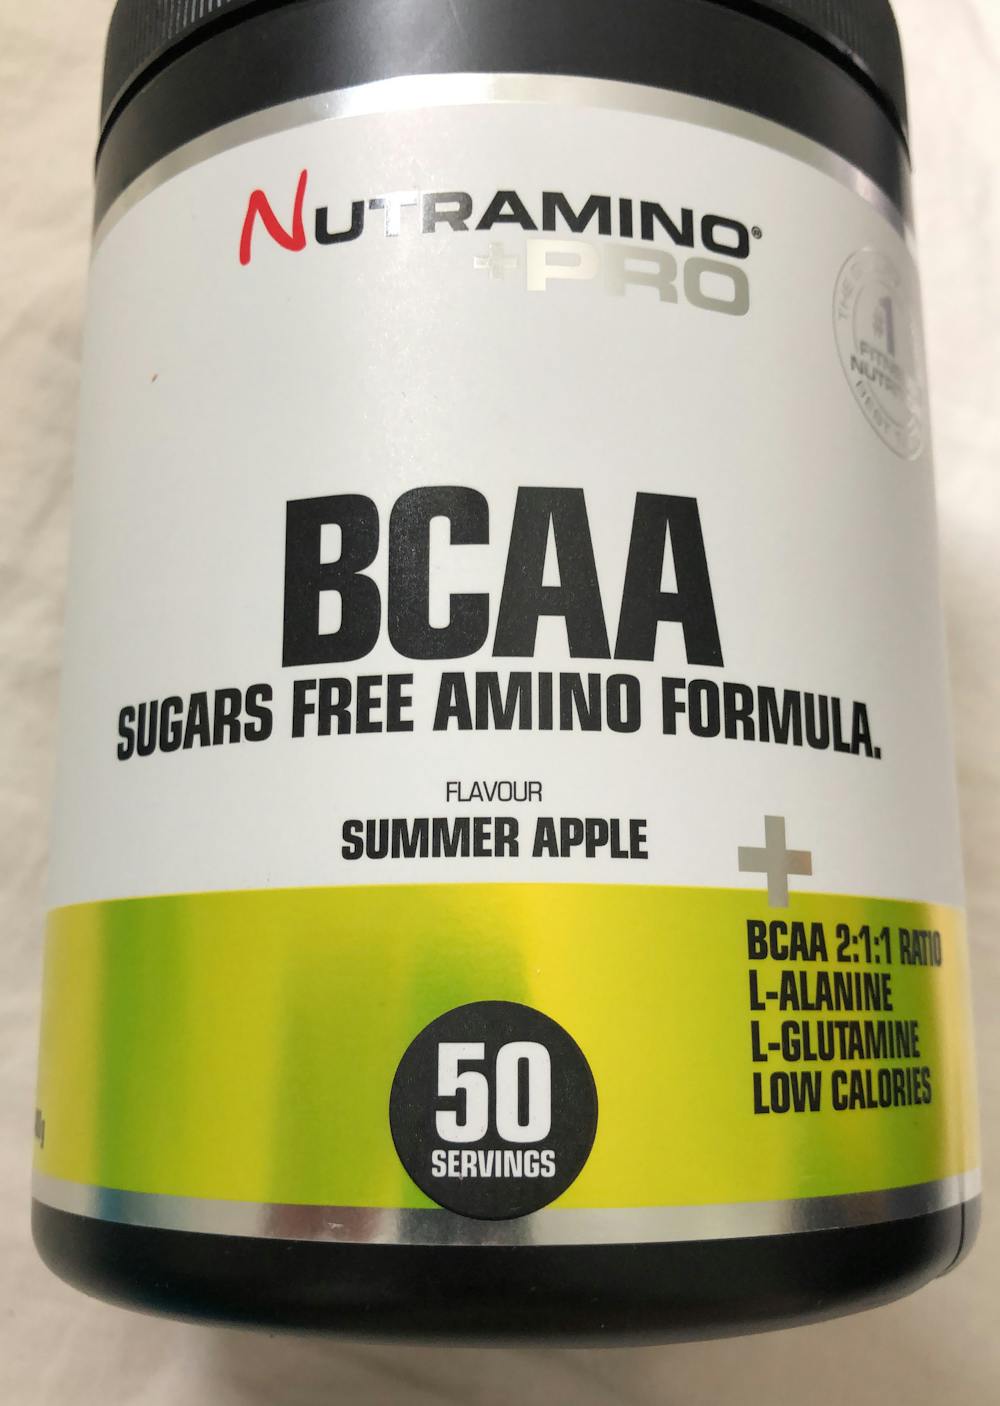 BCAA sugars free amino formula, Nutramino pro